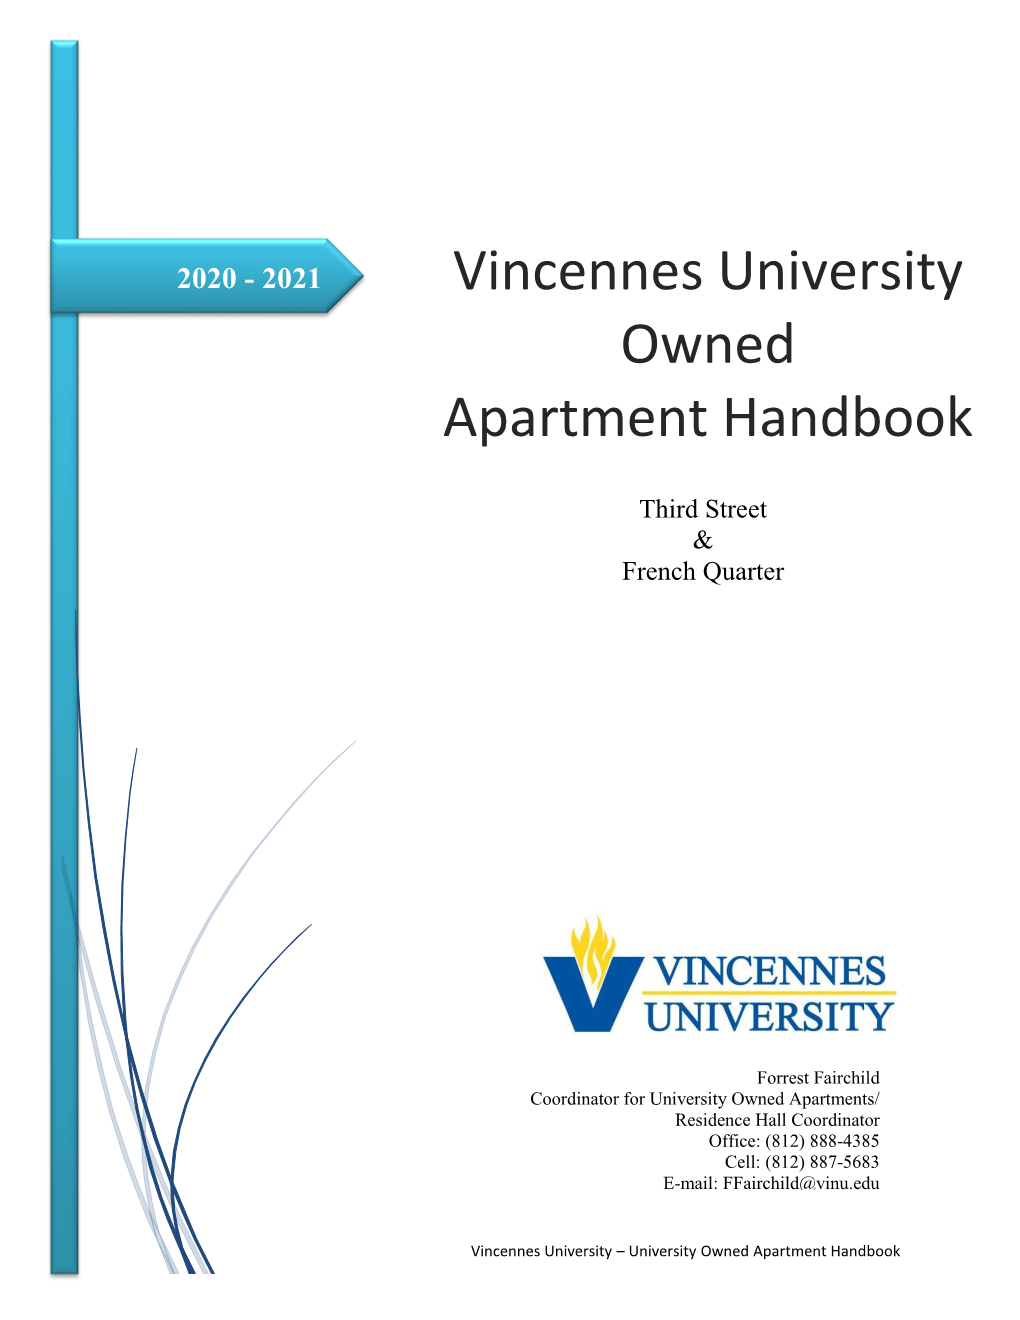 Vincennes University Owned Apartment Handbook